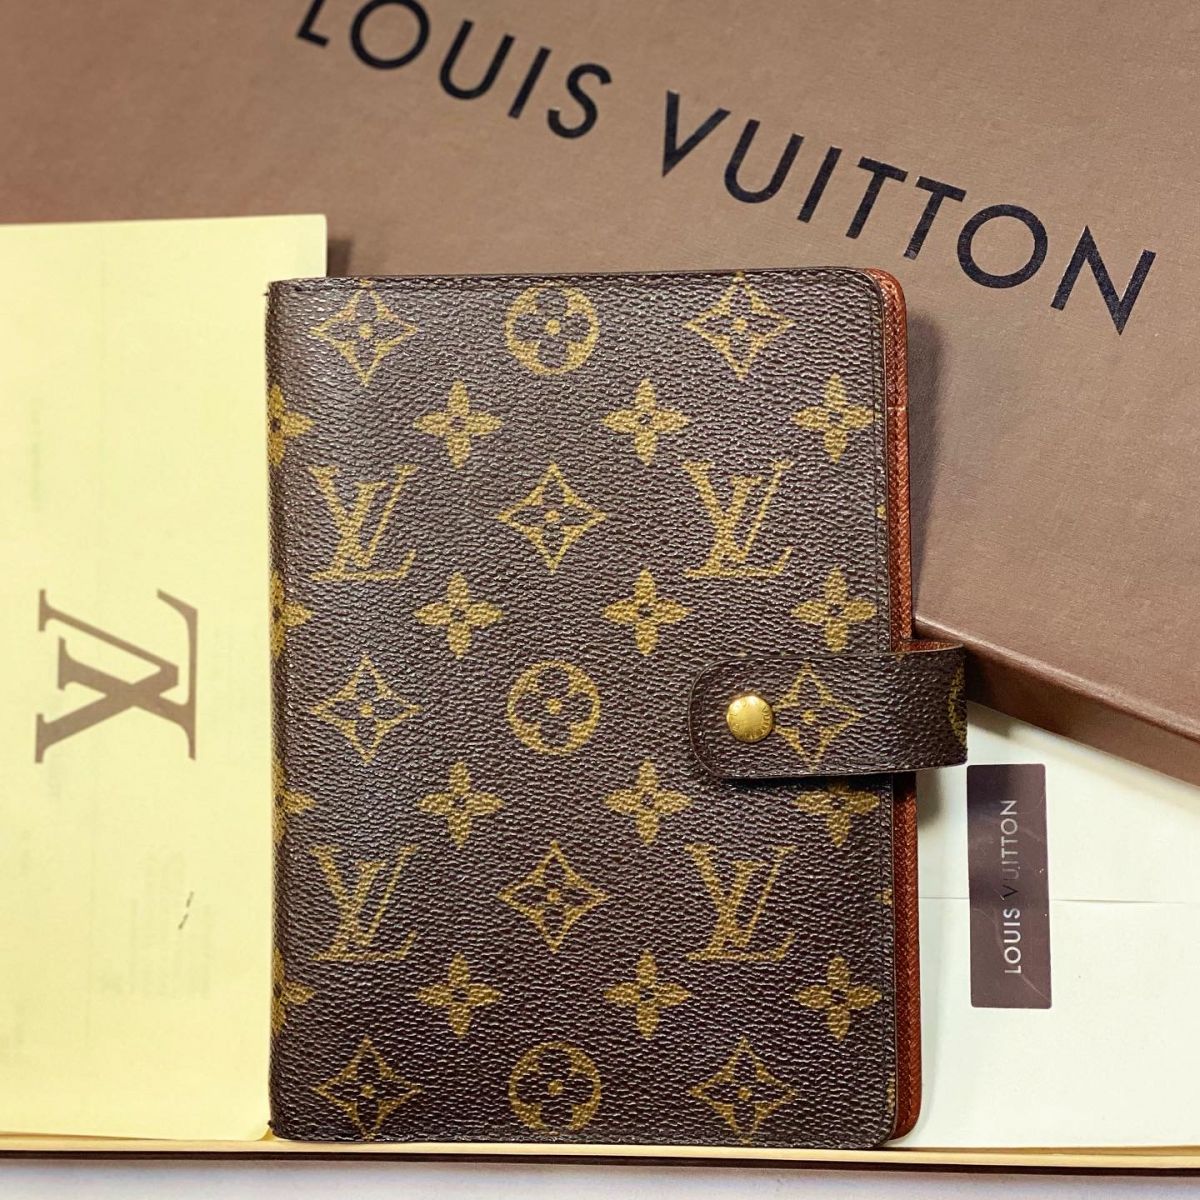 Записная книжка Louis Vuitton цена 15 385 руб 